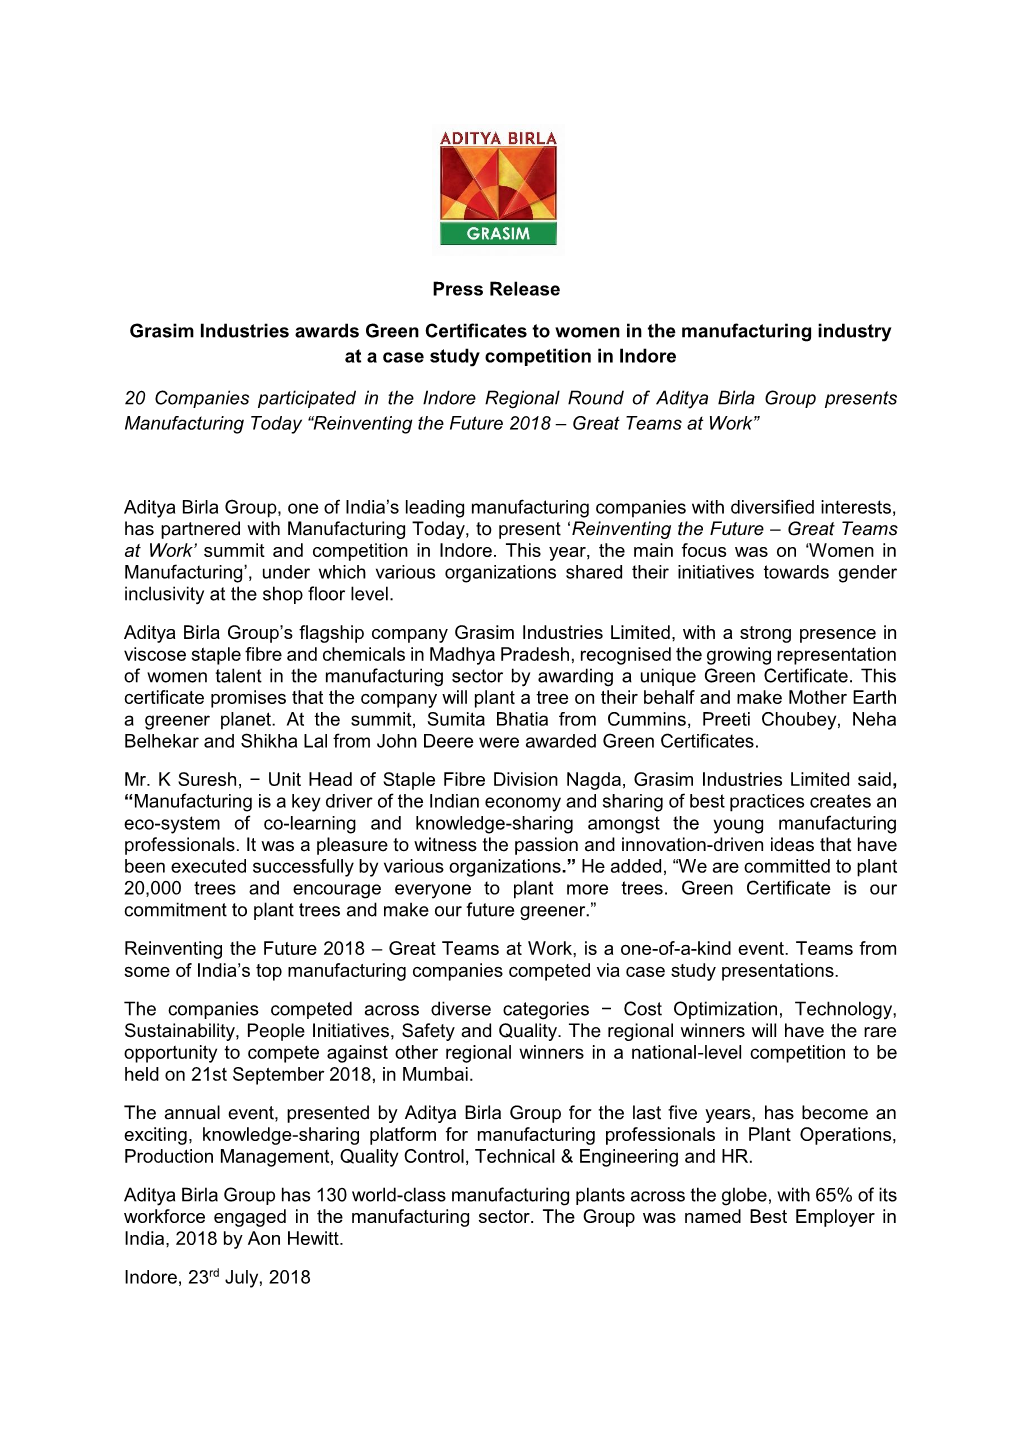 Press Release Grasim Industries Awards Green Certificates To